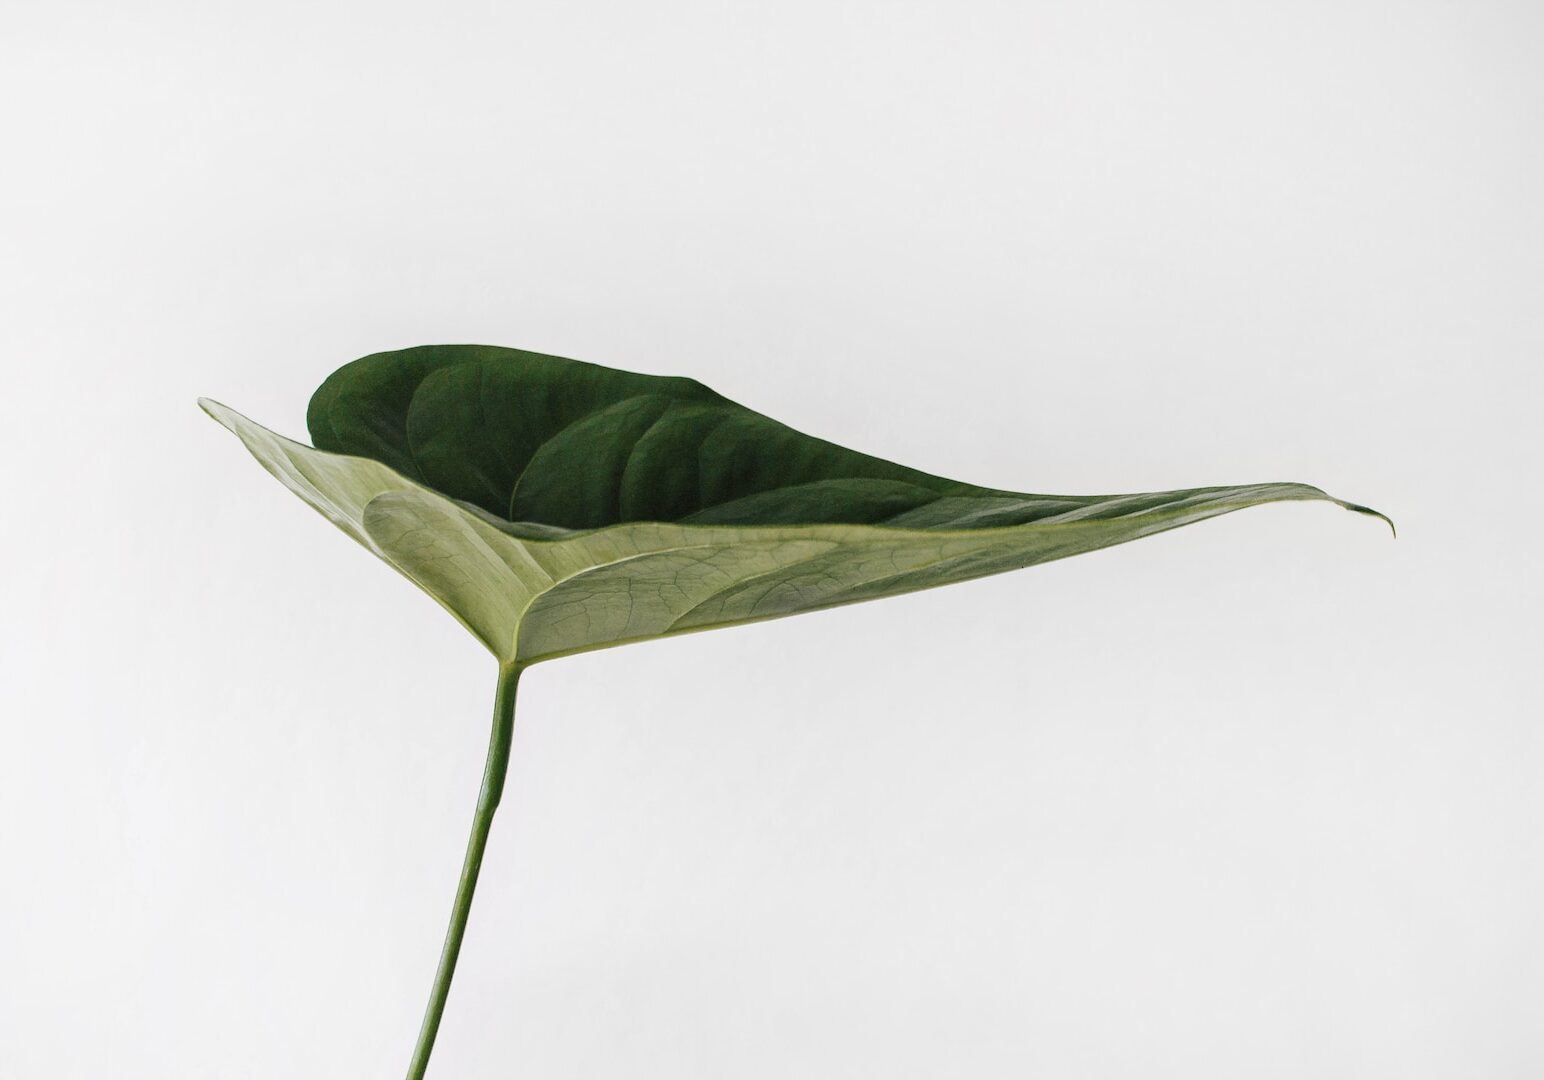 green leaf photography